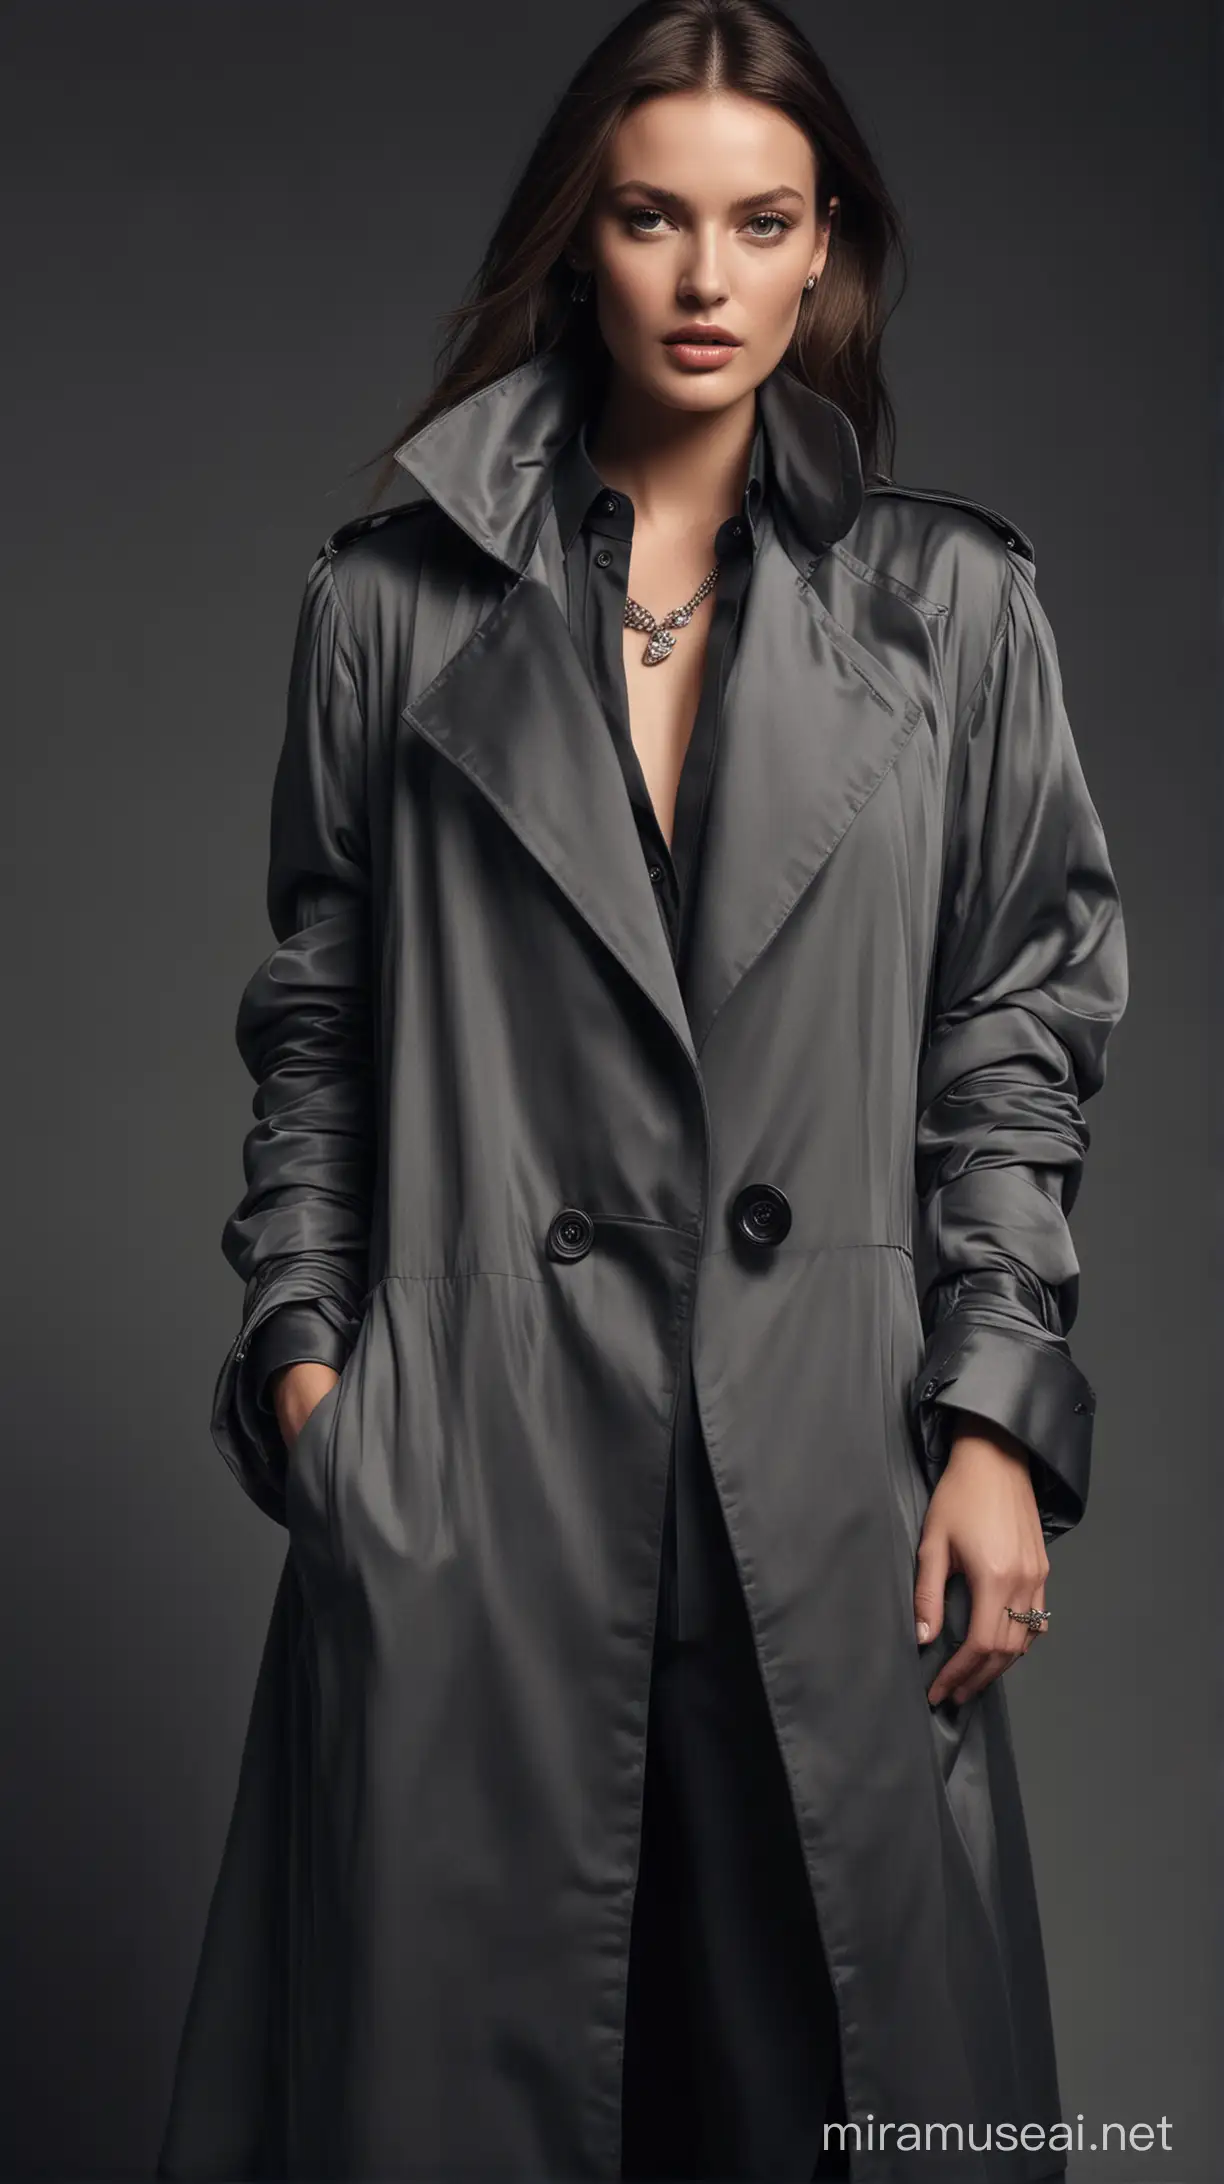 Glamorous Montelago Fashion Model in Alexander McQueen Style Coat